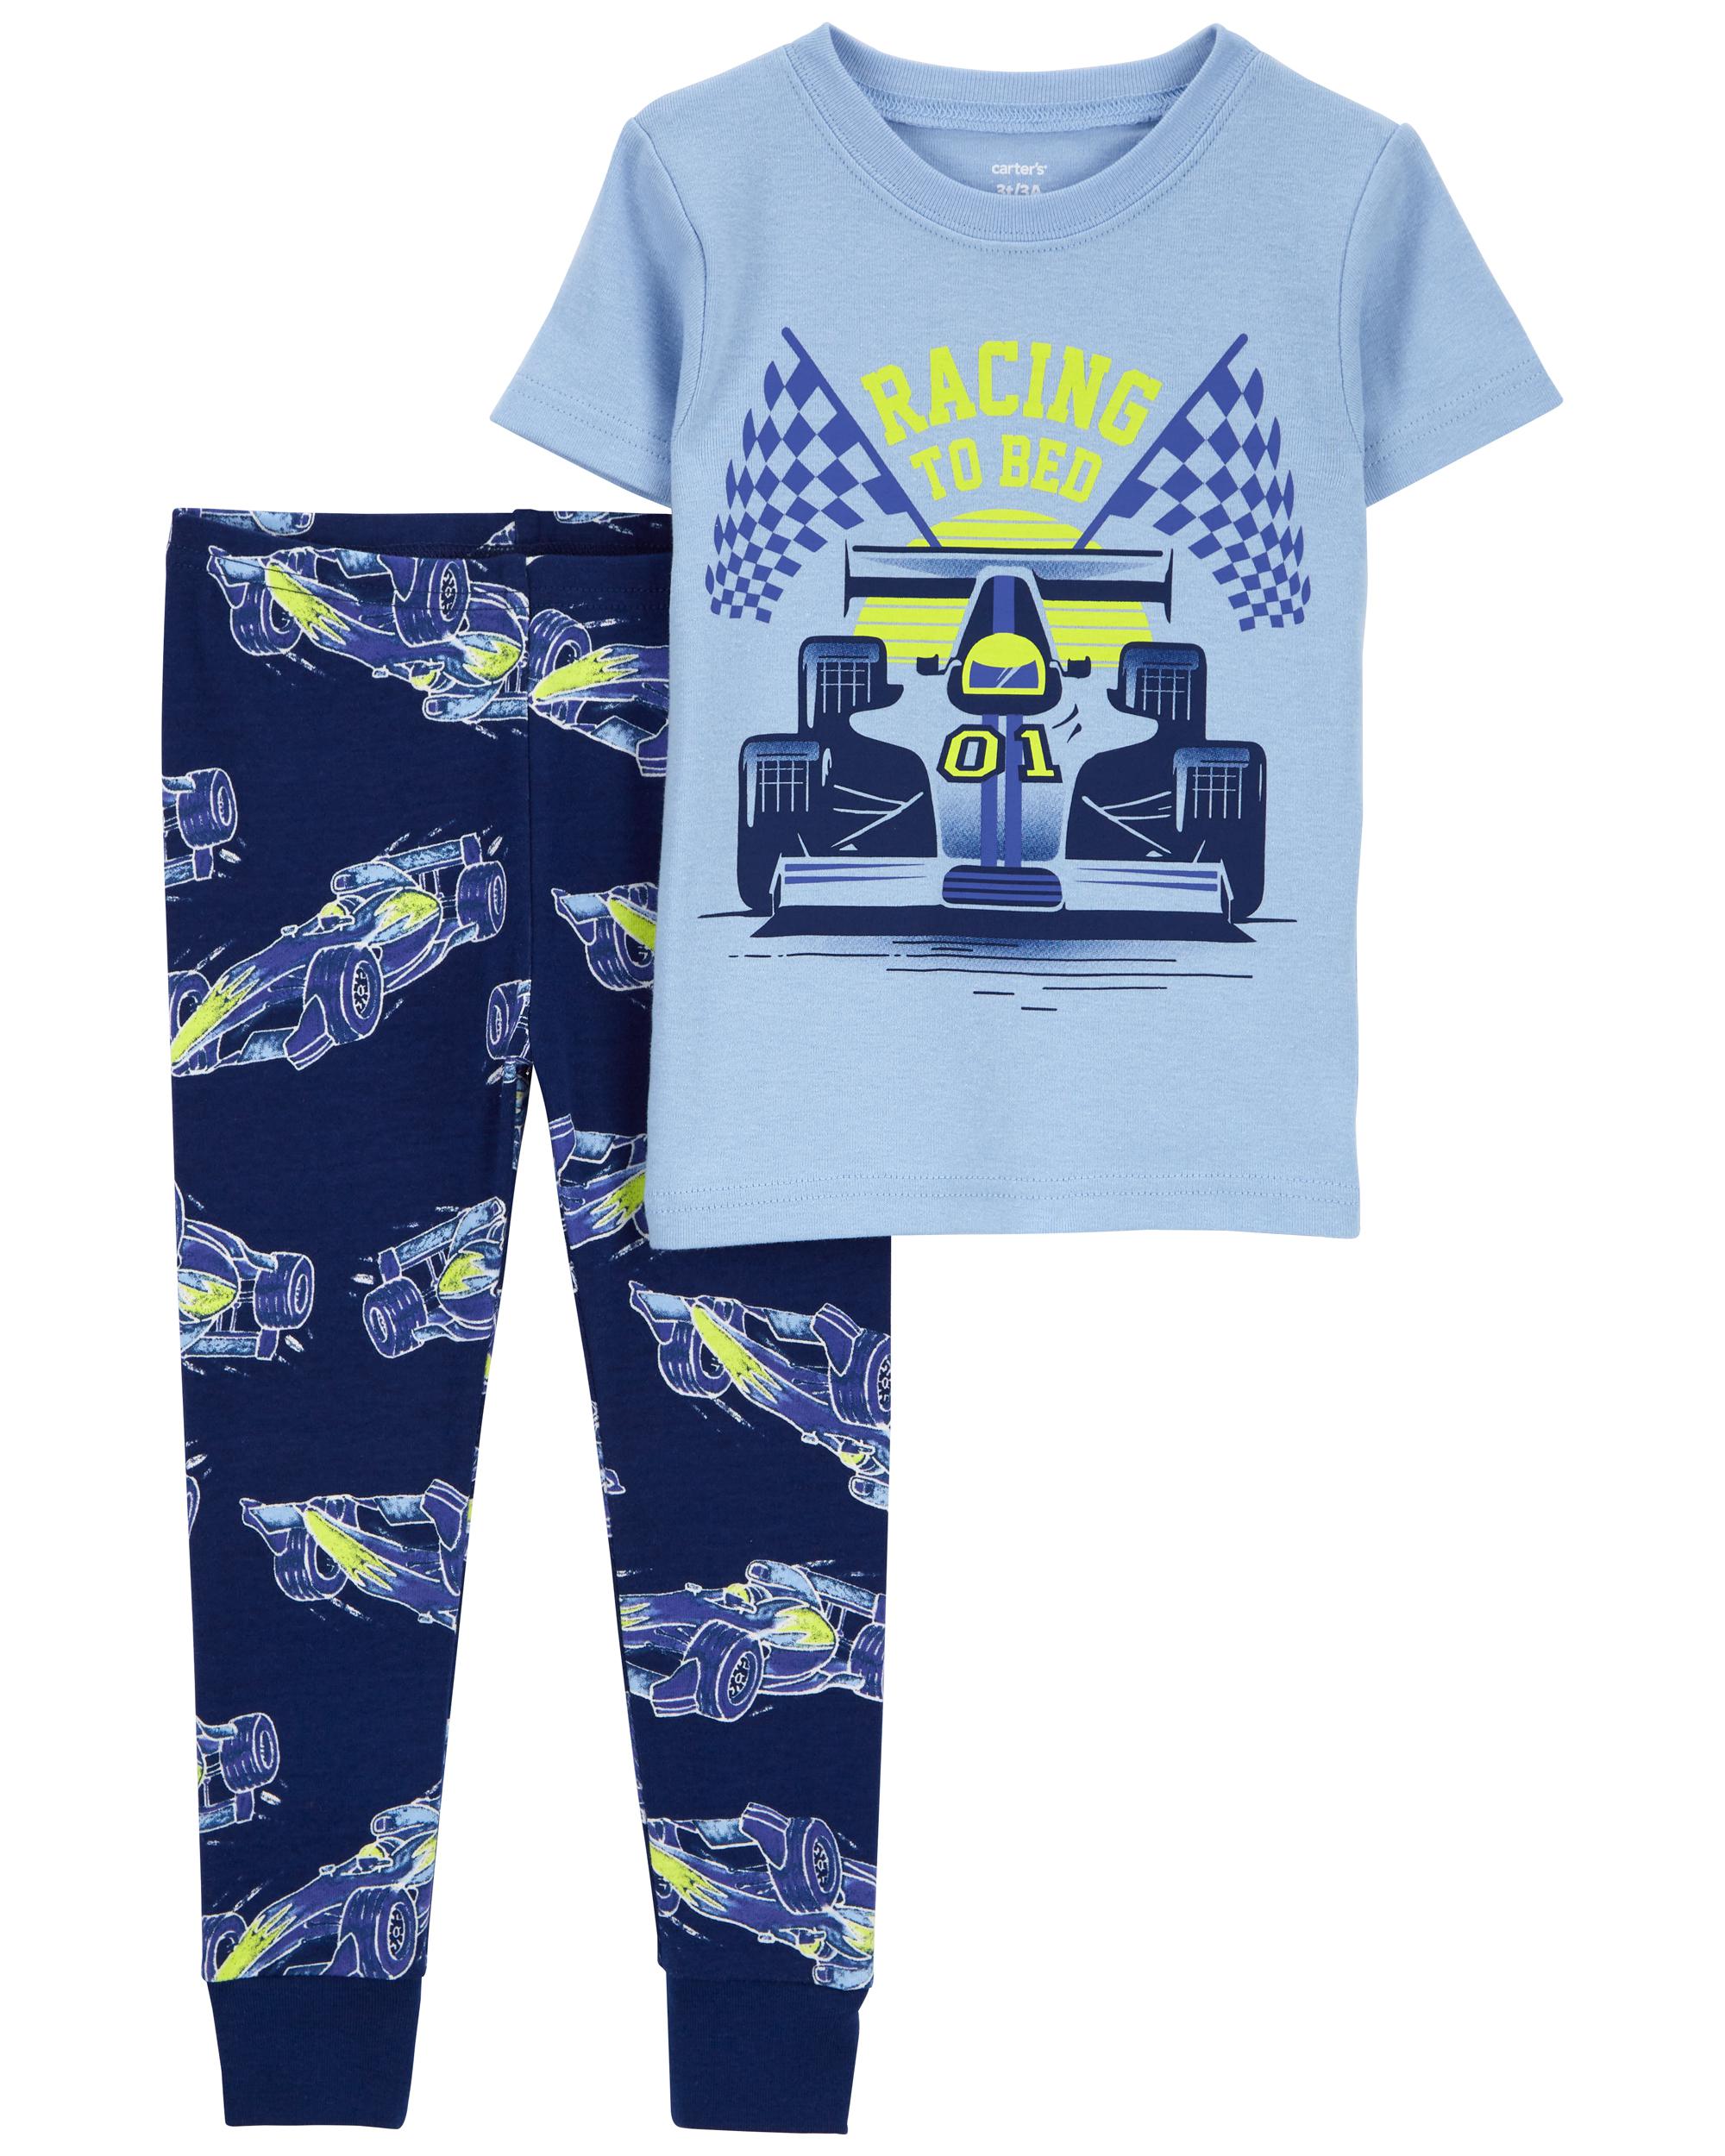 Piece Racing 100% Snug Fit Cotton Pyjamas